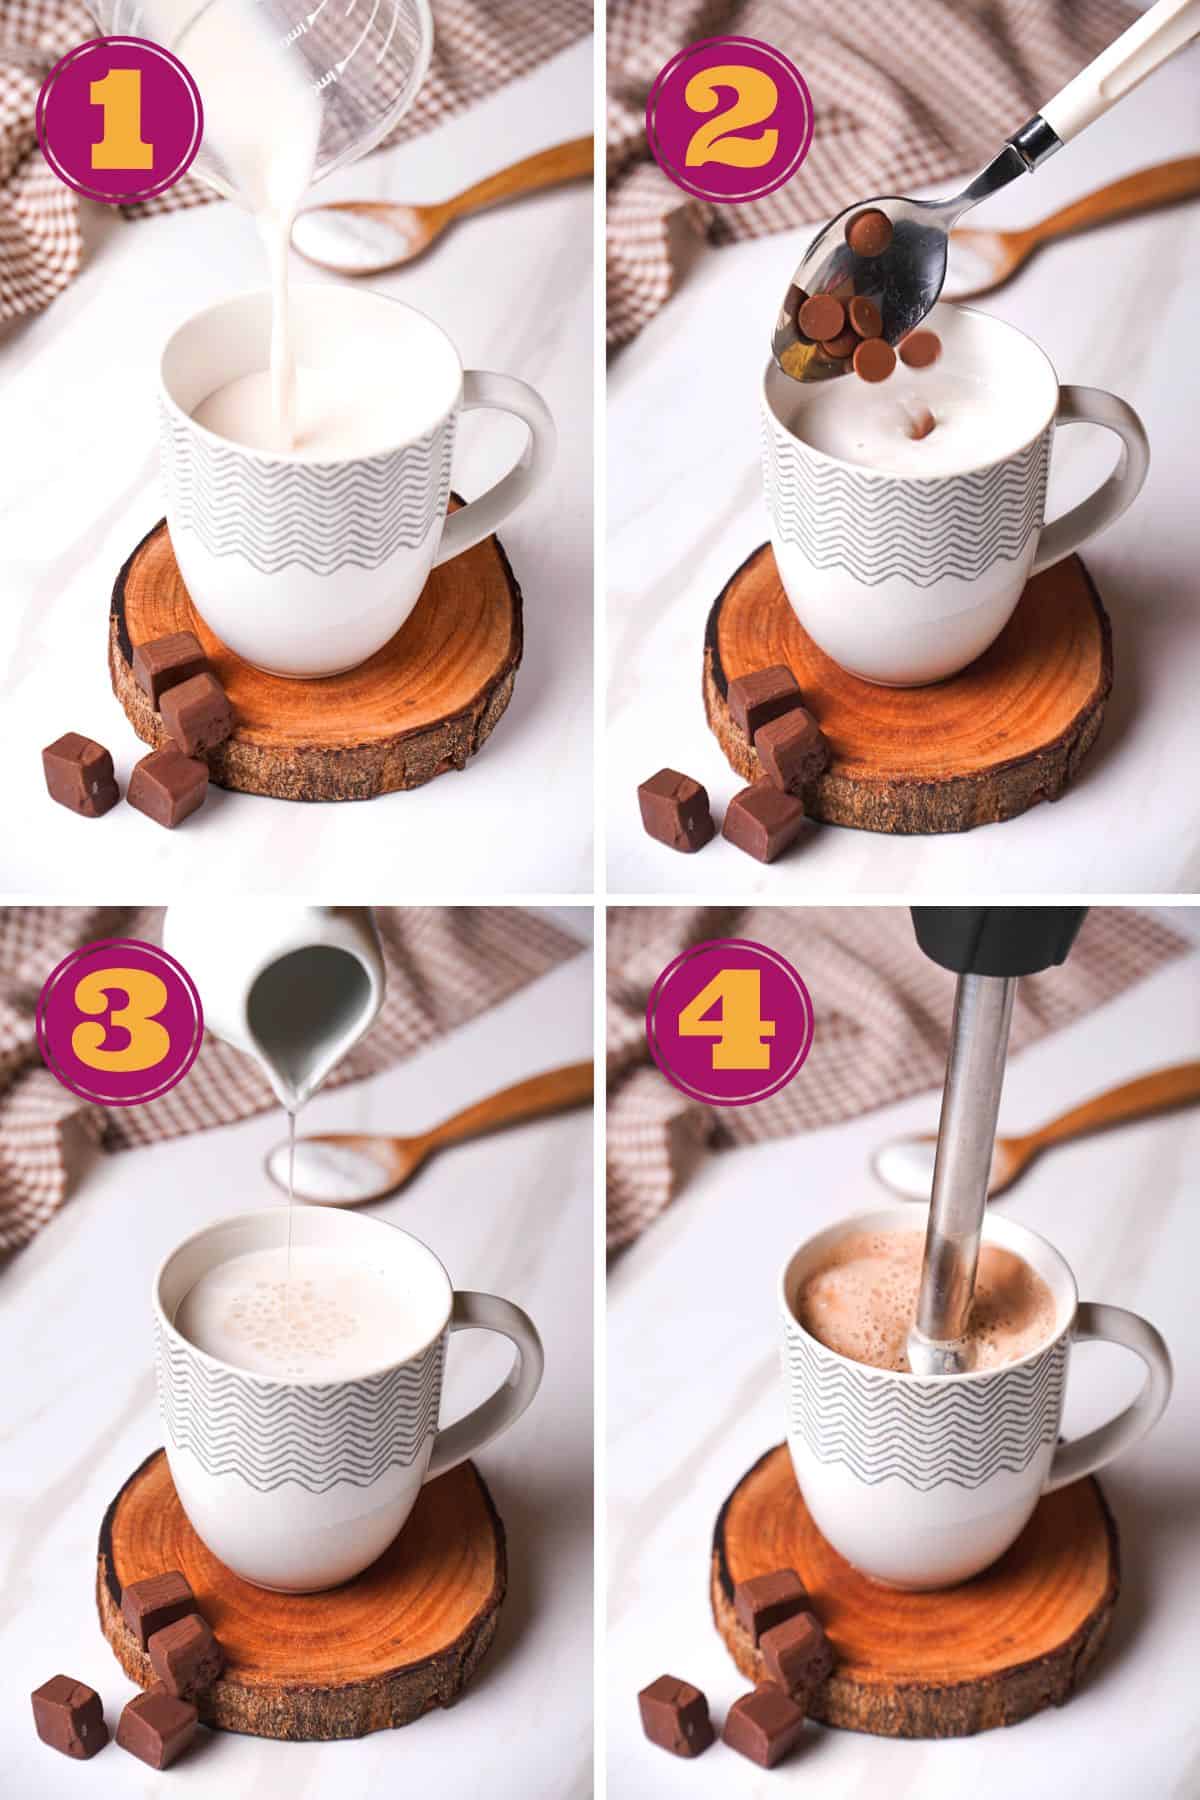 steps to make Sugar-free Hot Chocolate